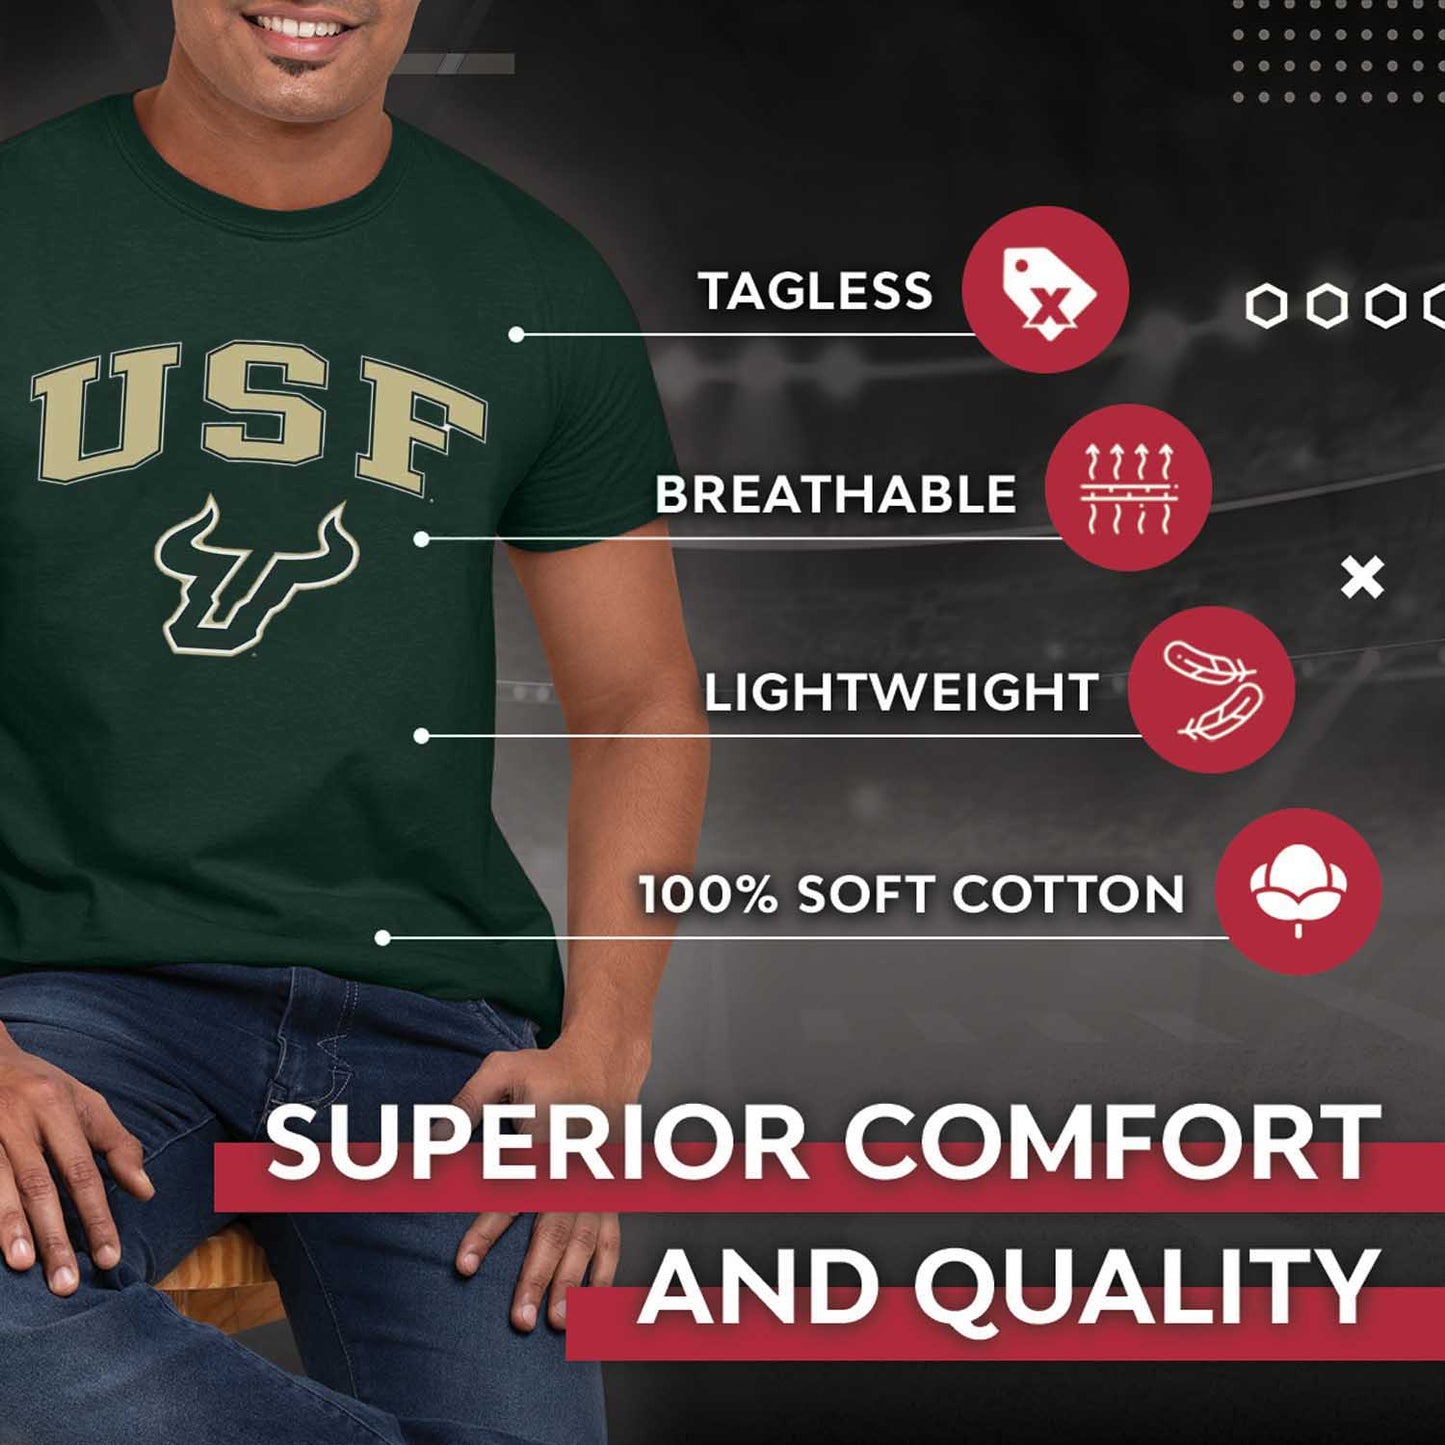 USF Bulls NCAA Adult Gameday Cotton T-Shirt - Green